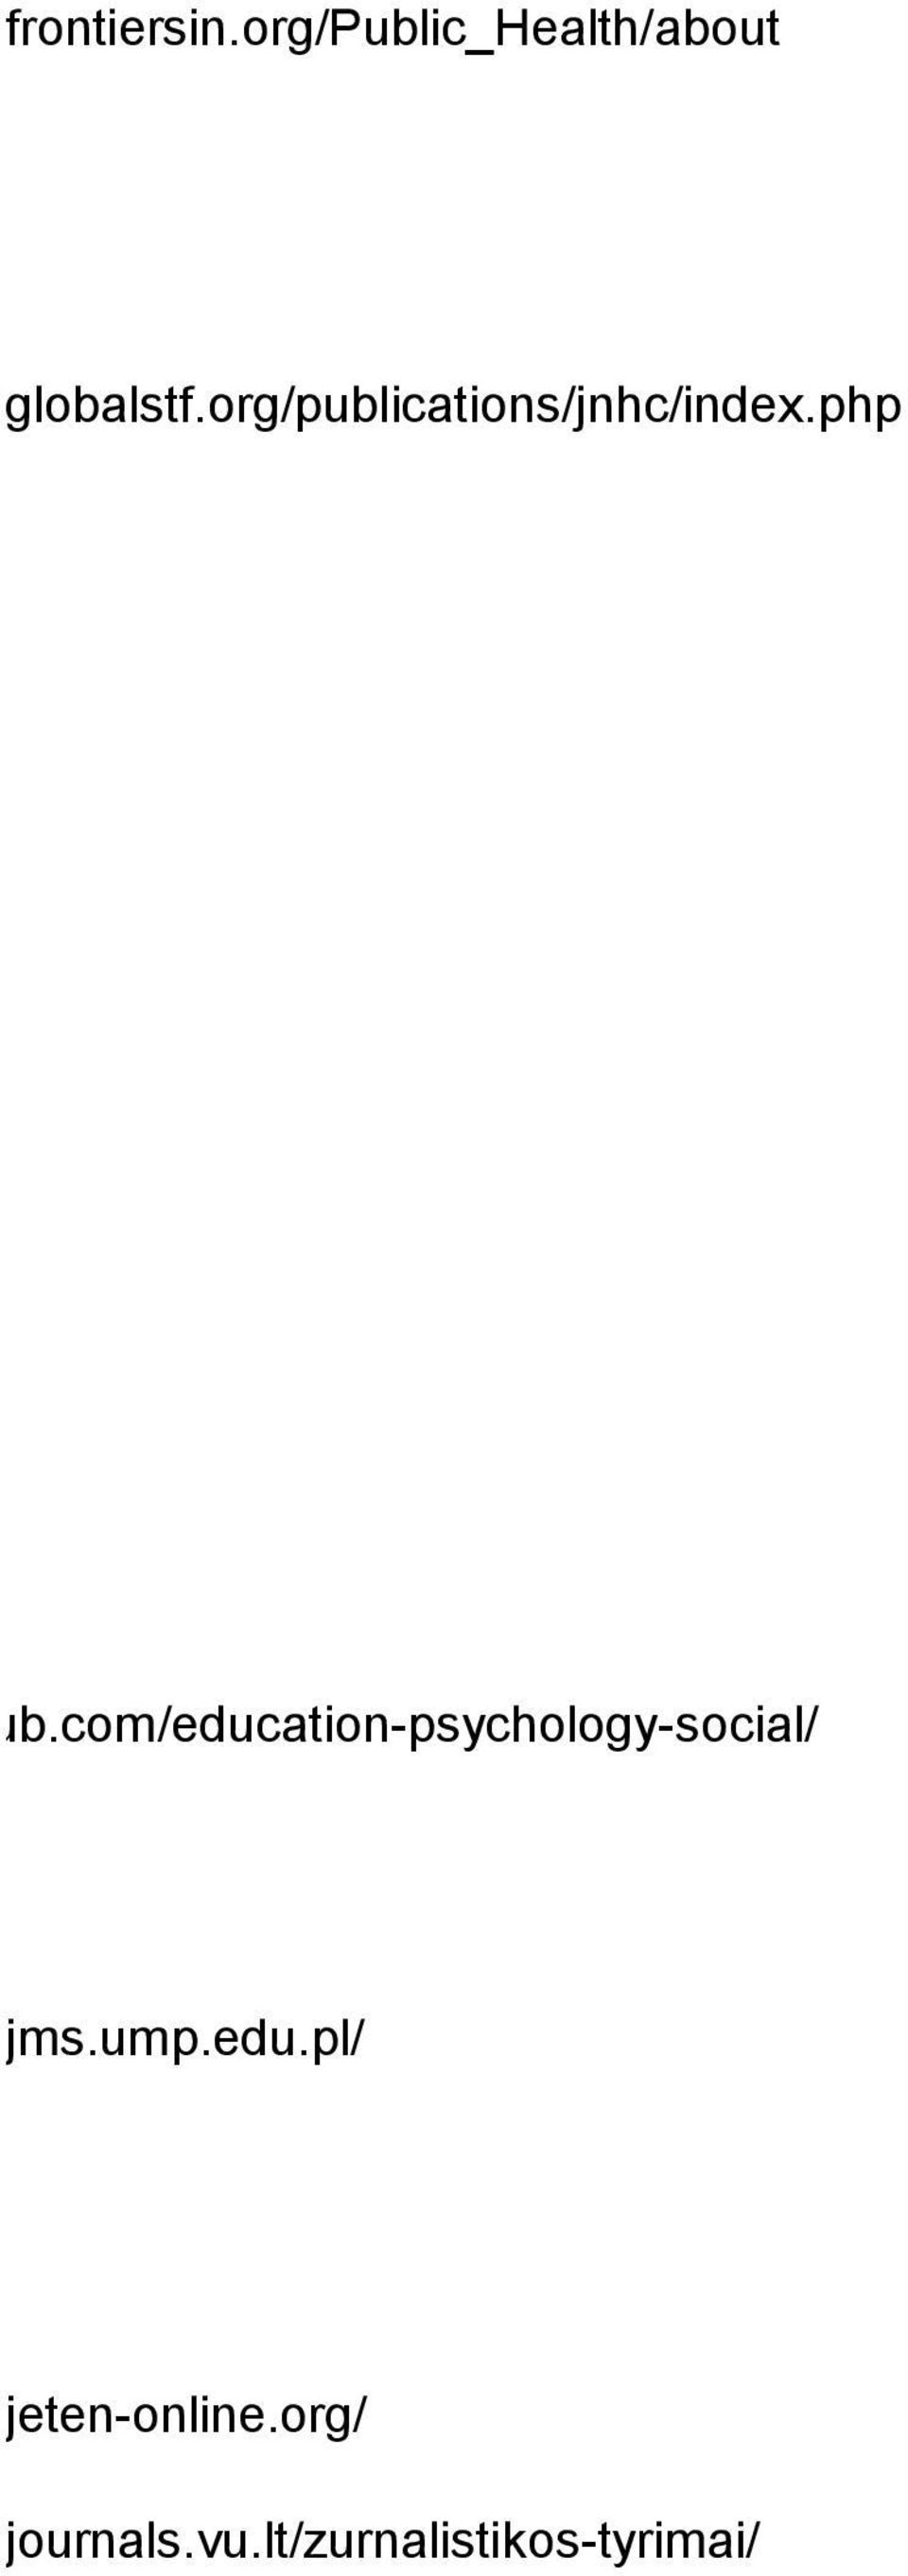 com/education-psychology-social/ http://www.jms.ump.edu.pl/ http://www.